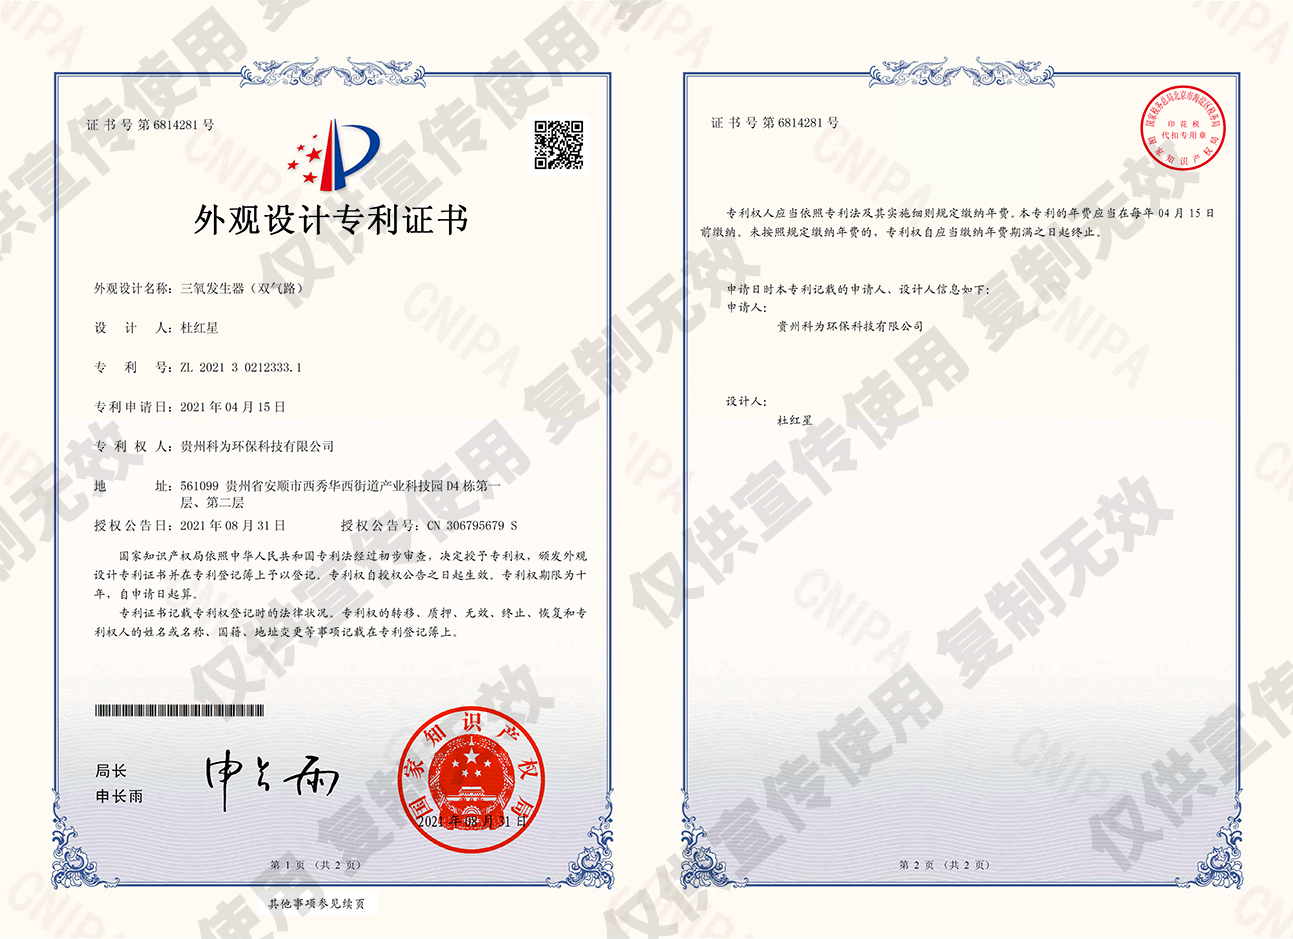 O3 Generator (Dual-air-route) Design Patent Certificate (6814281) 